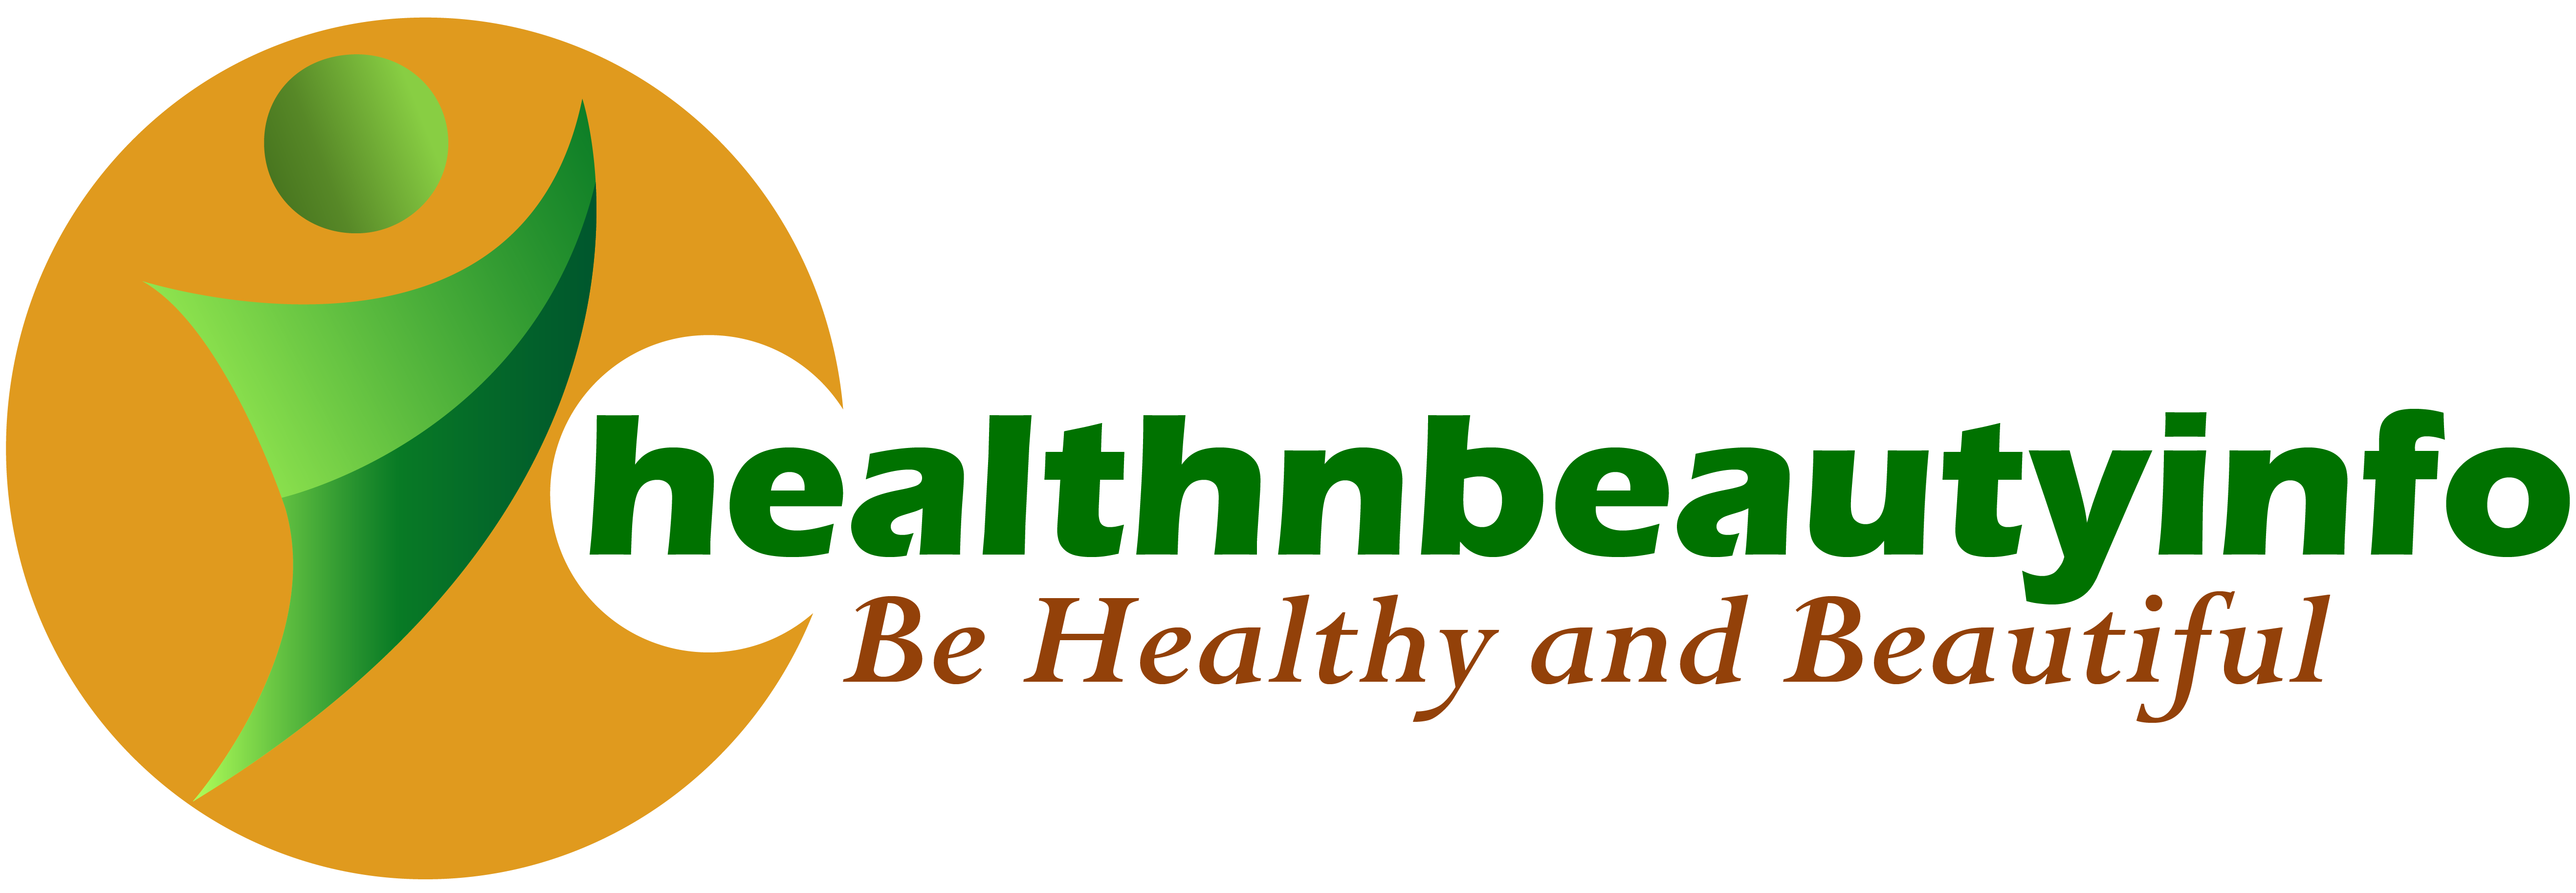 Healthnbeautyinfo-logo